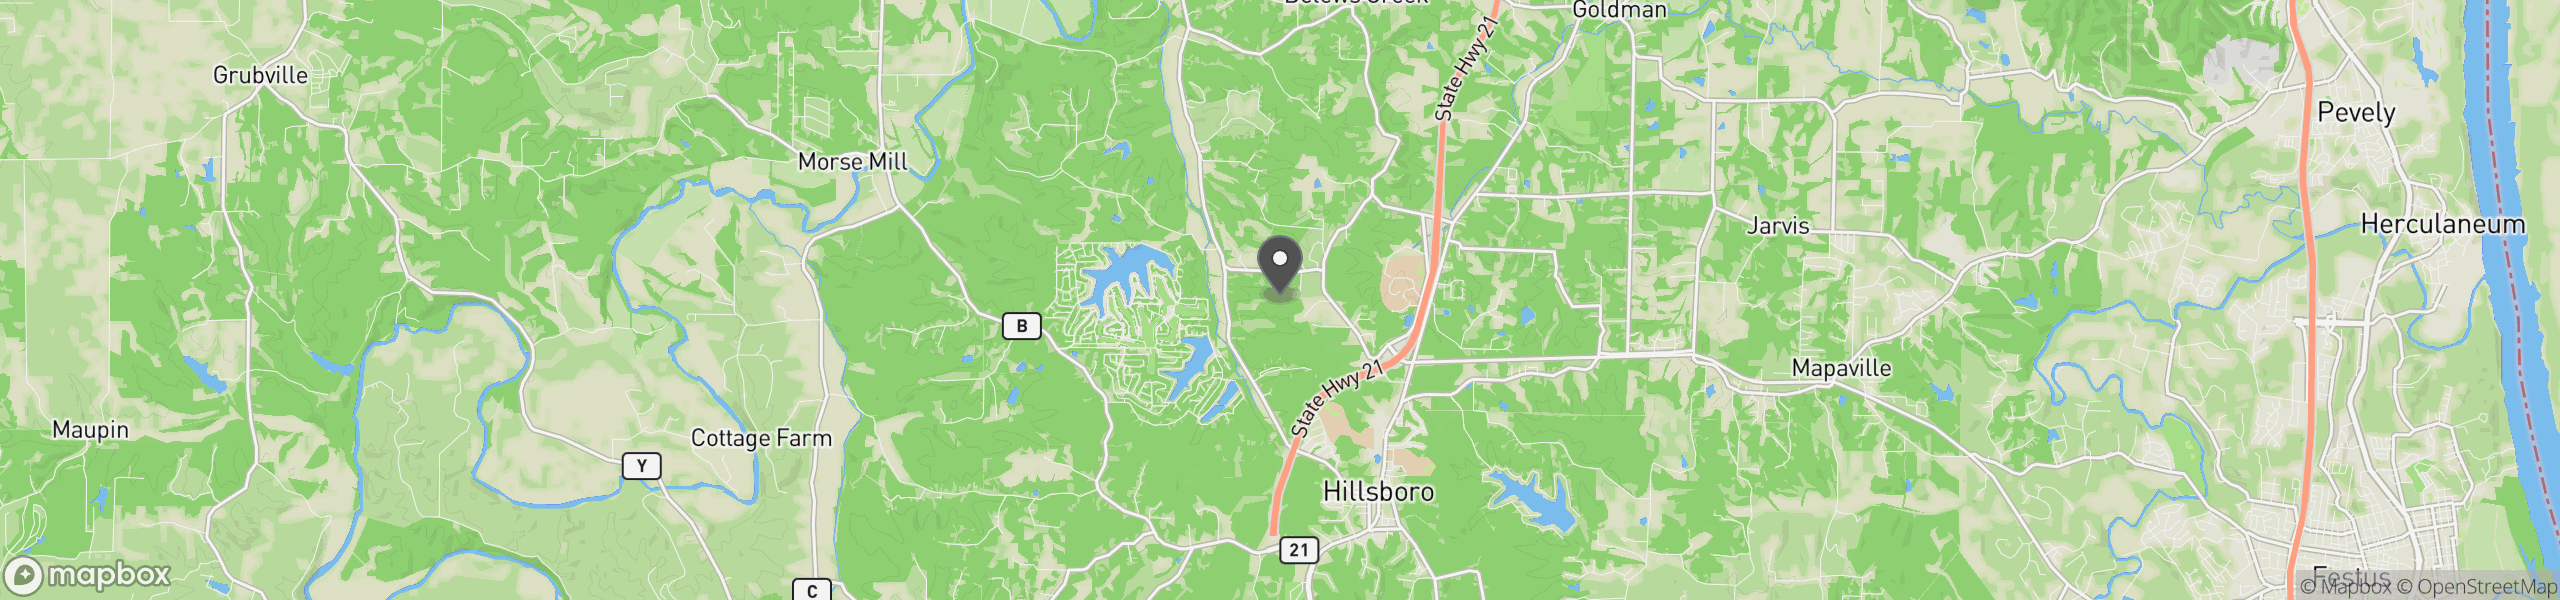 Hillsboro, MO 63050